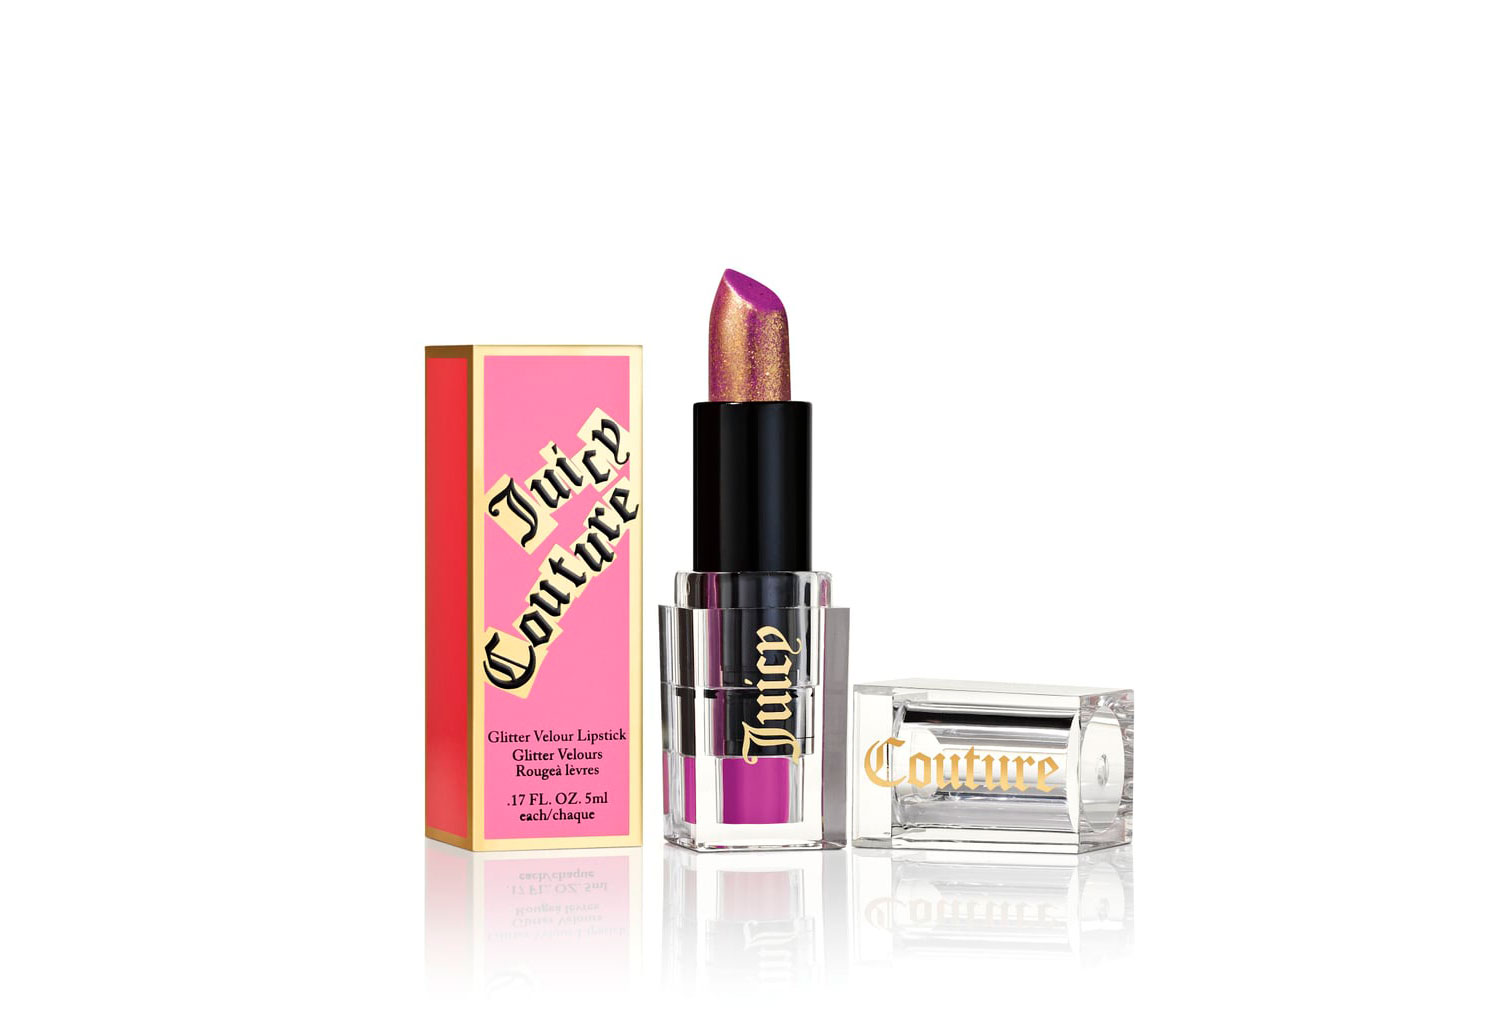 Glitter Velour Lipstick UV Darling